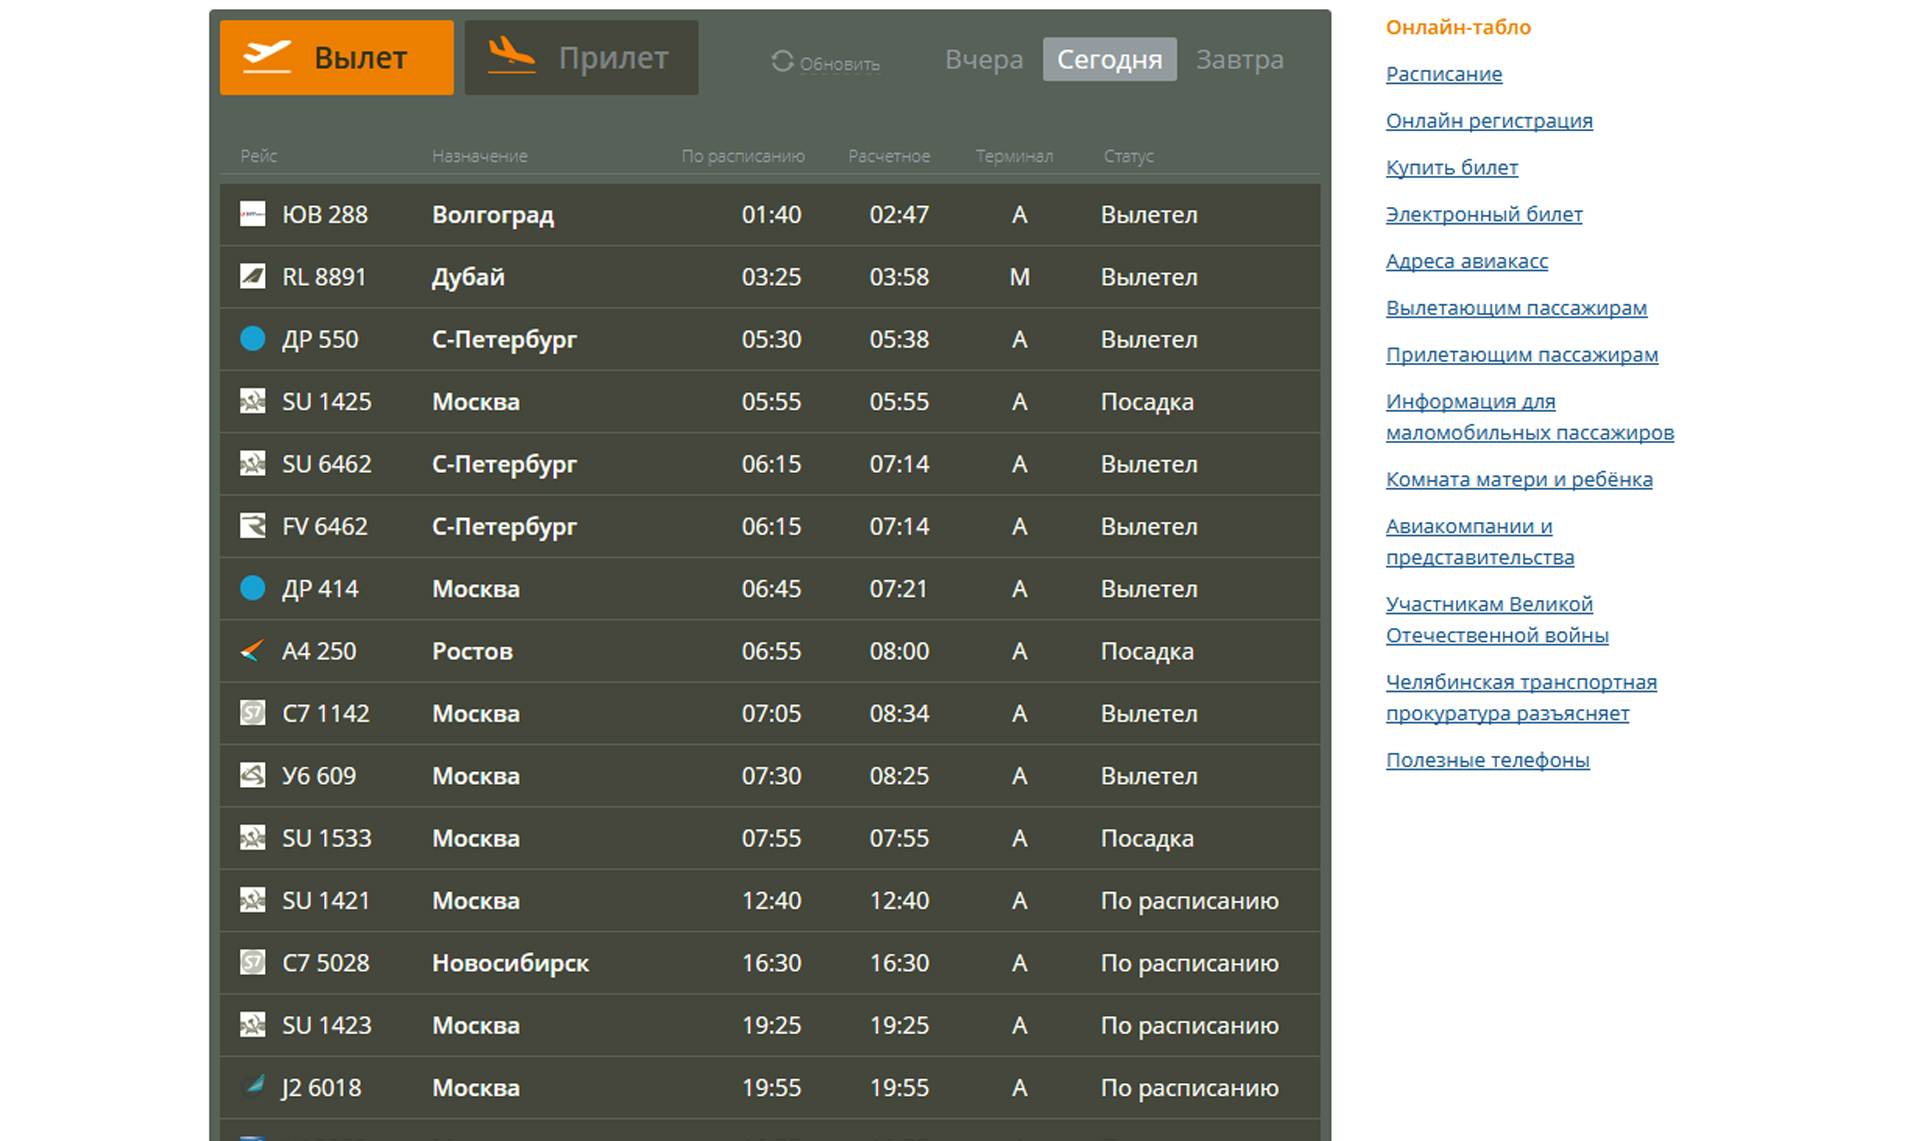 Авиабилеты в москву онлайн табло билеты на самолет ростов камчатка